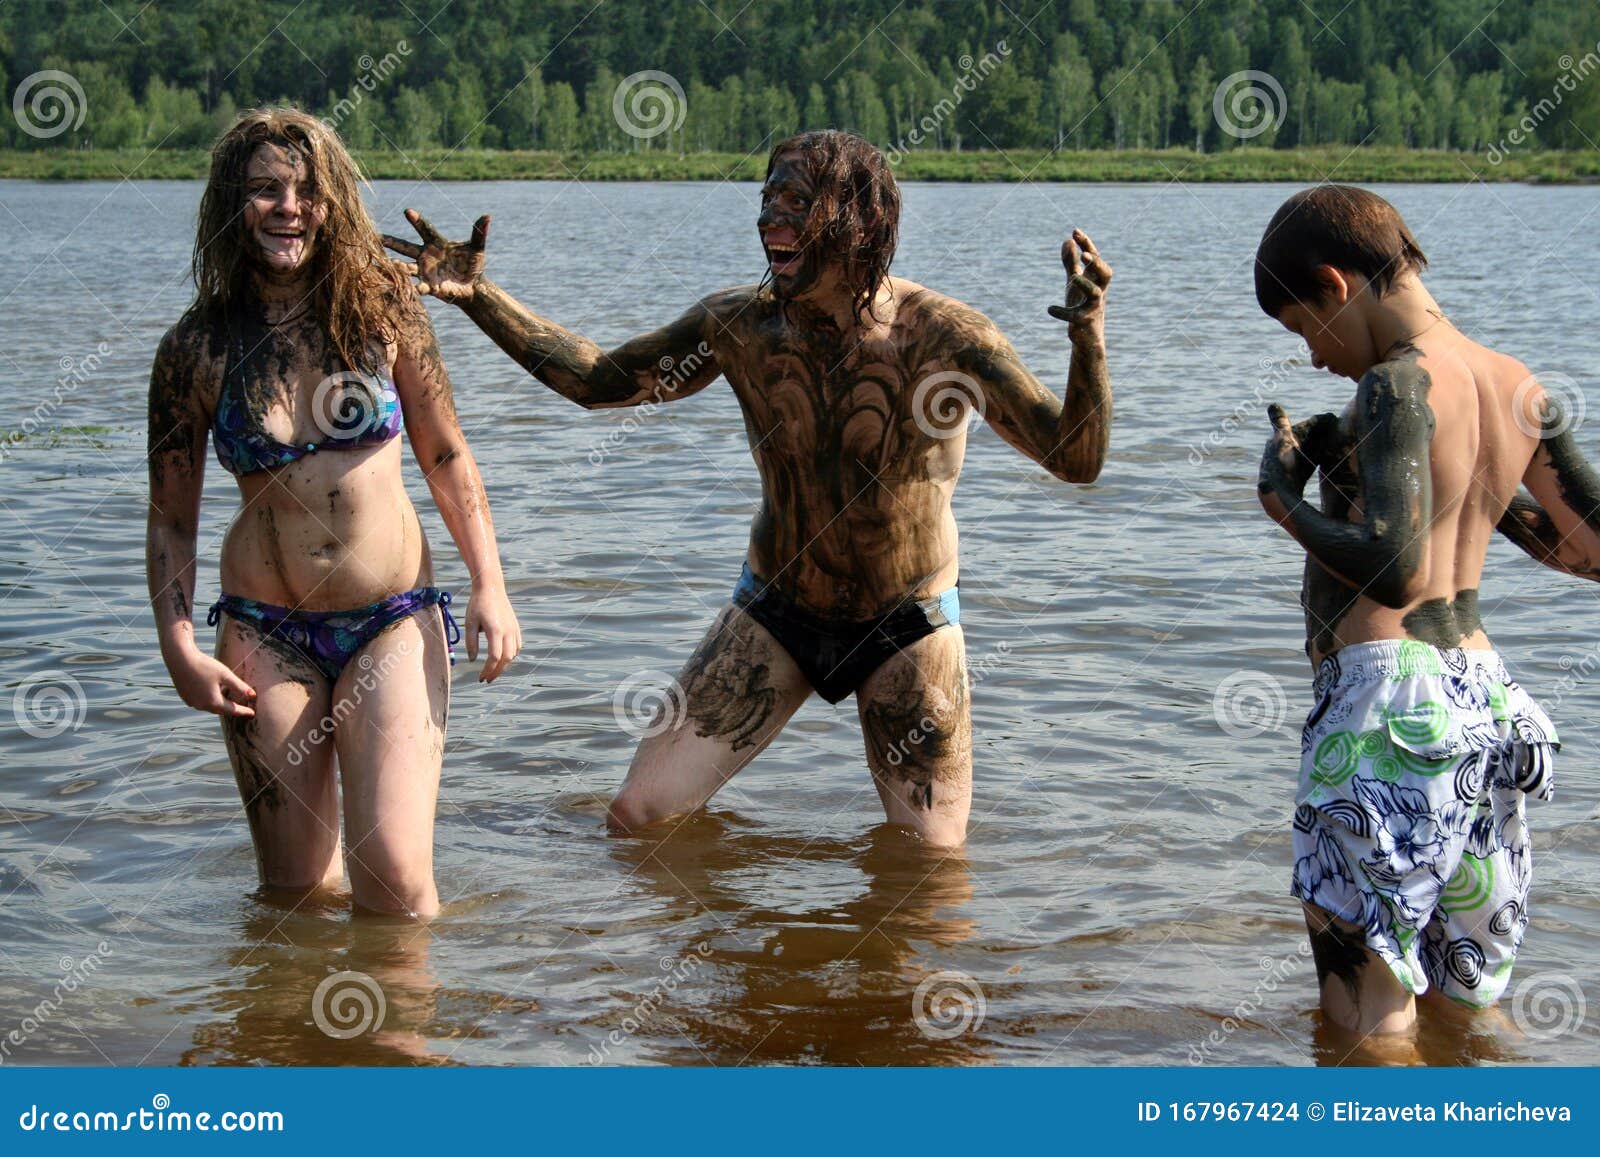 Russian family nudist